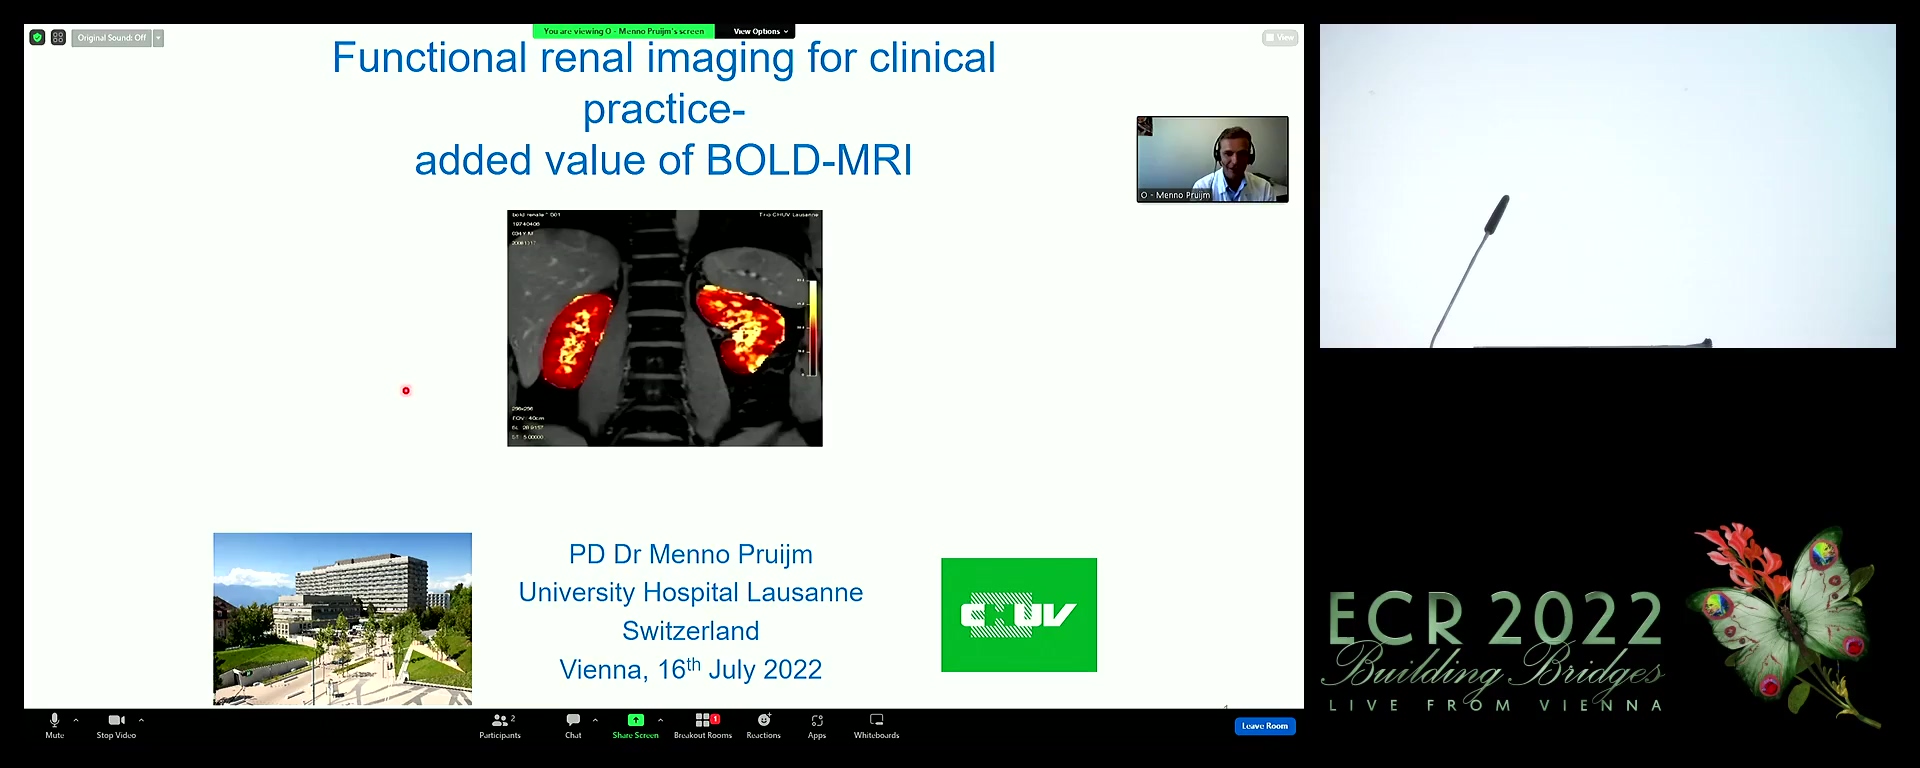 Added value of BOLD MRI